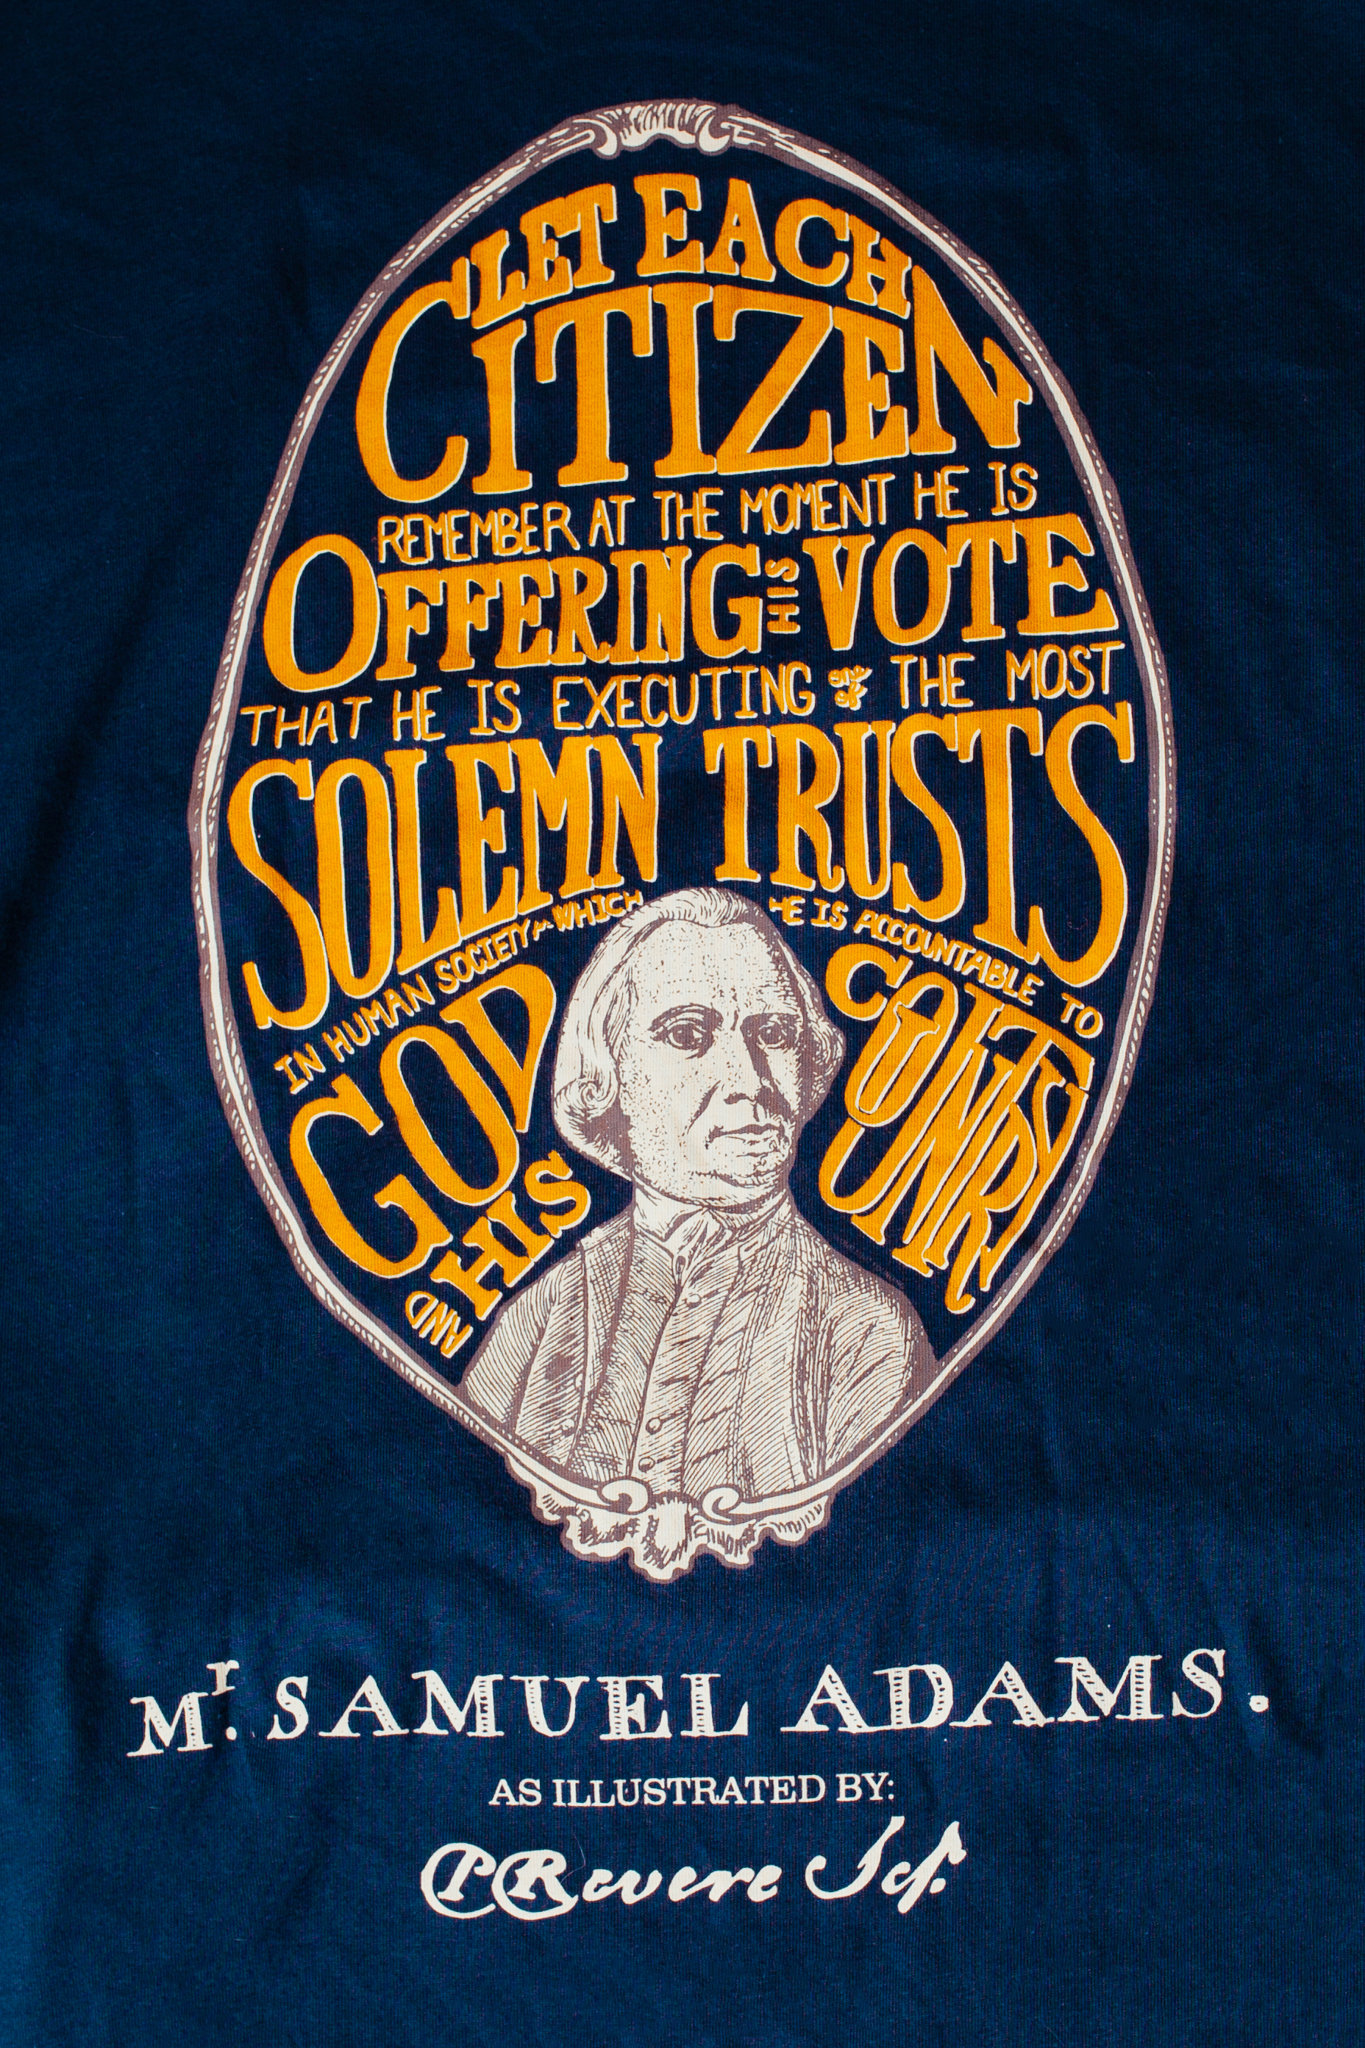 Samuel Adams on Voting Accountability